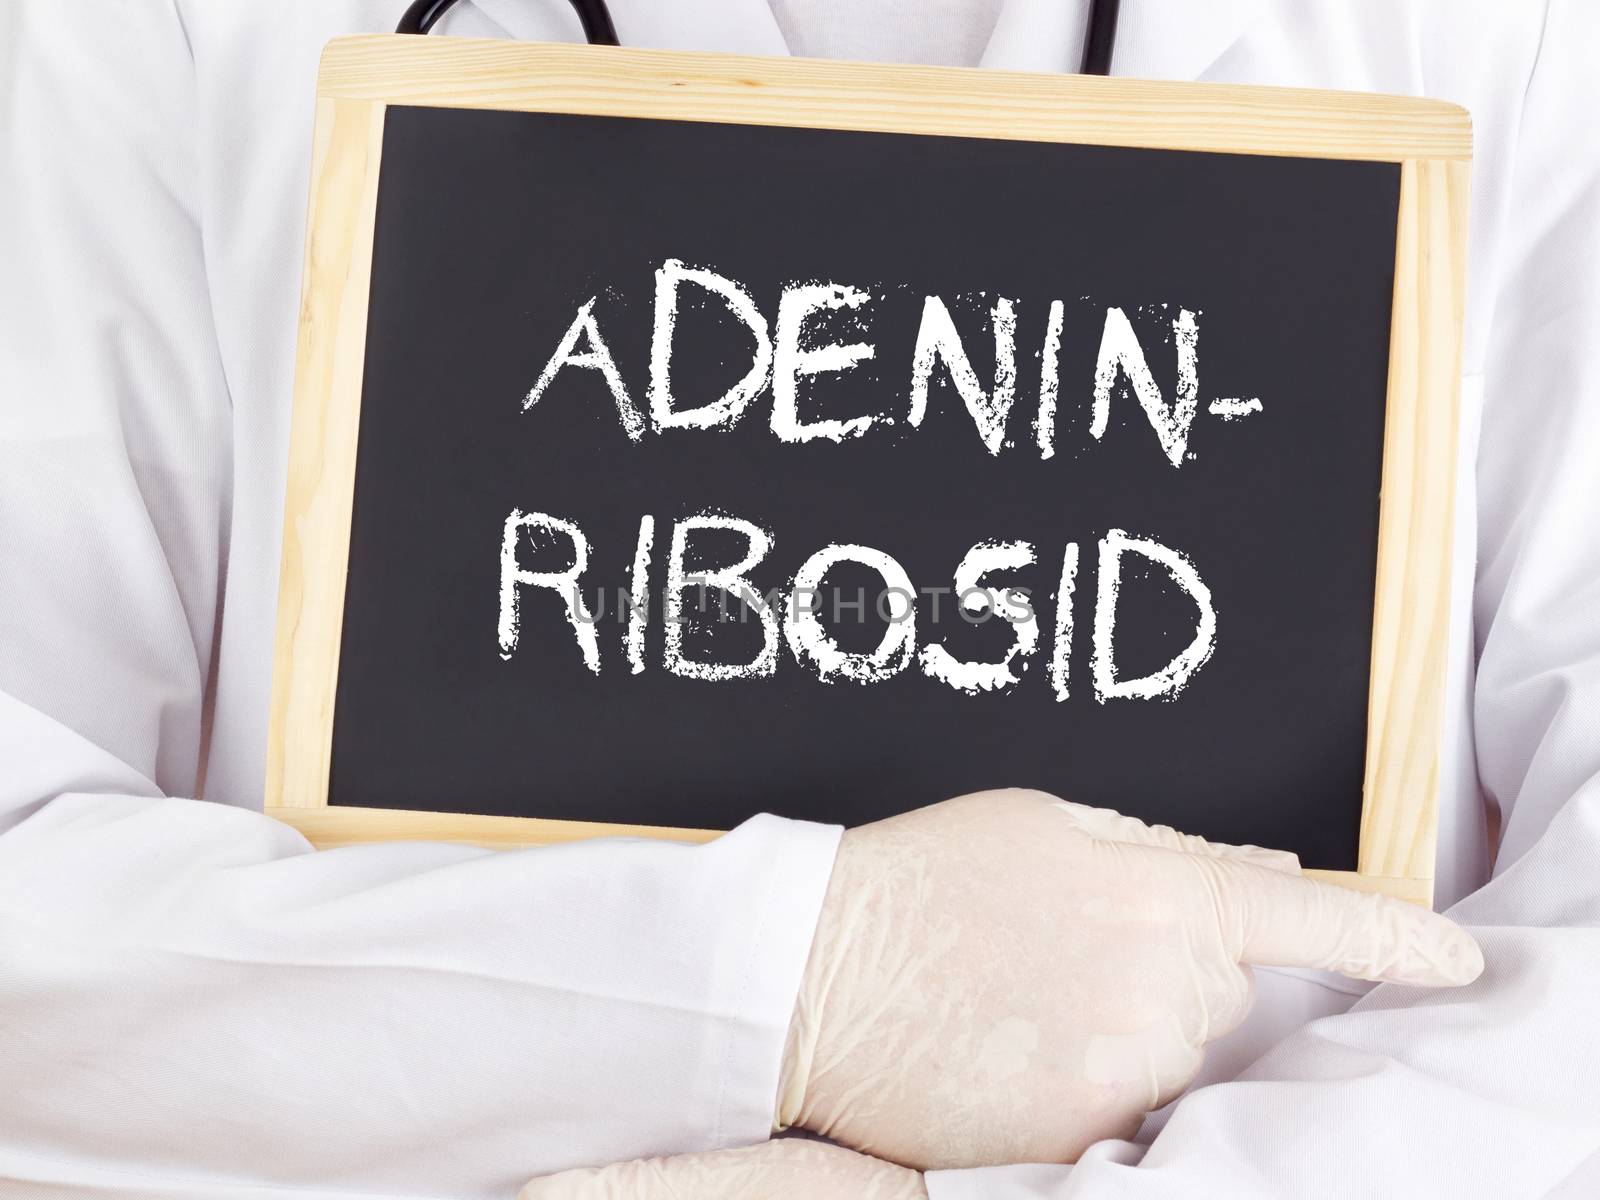 Doctor shows information: adenine riboside in german